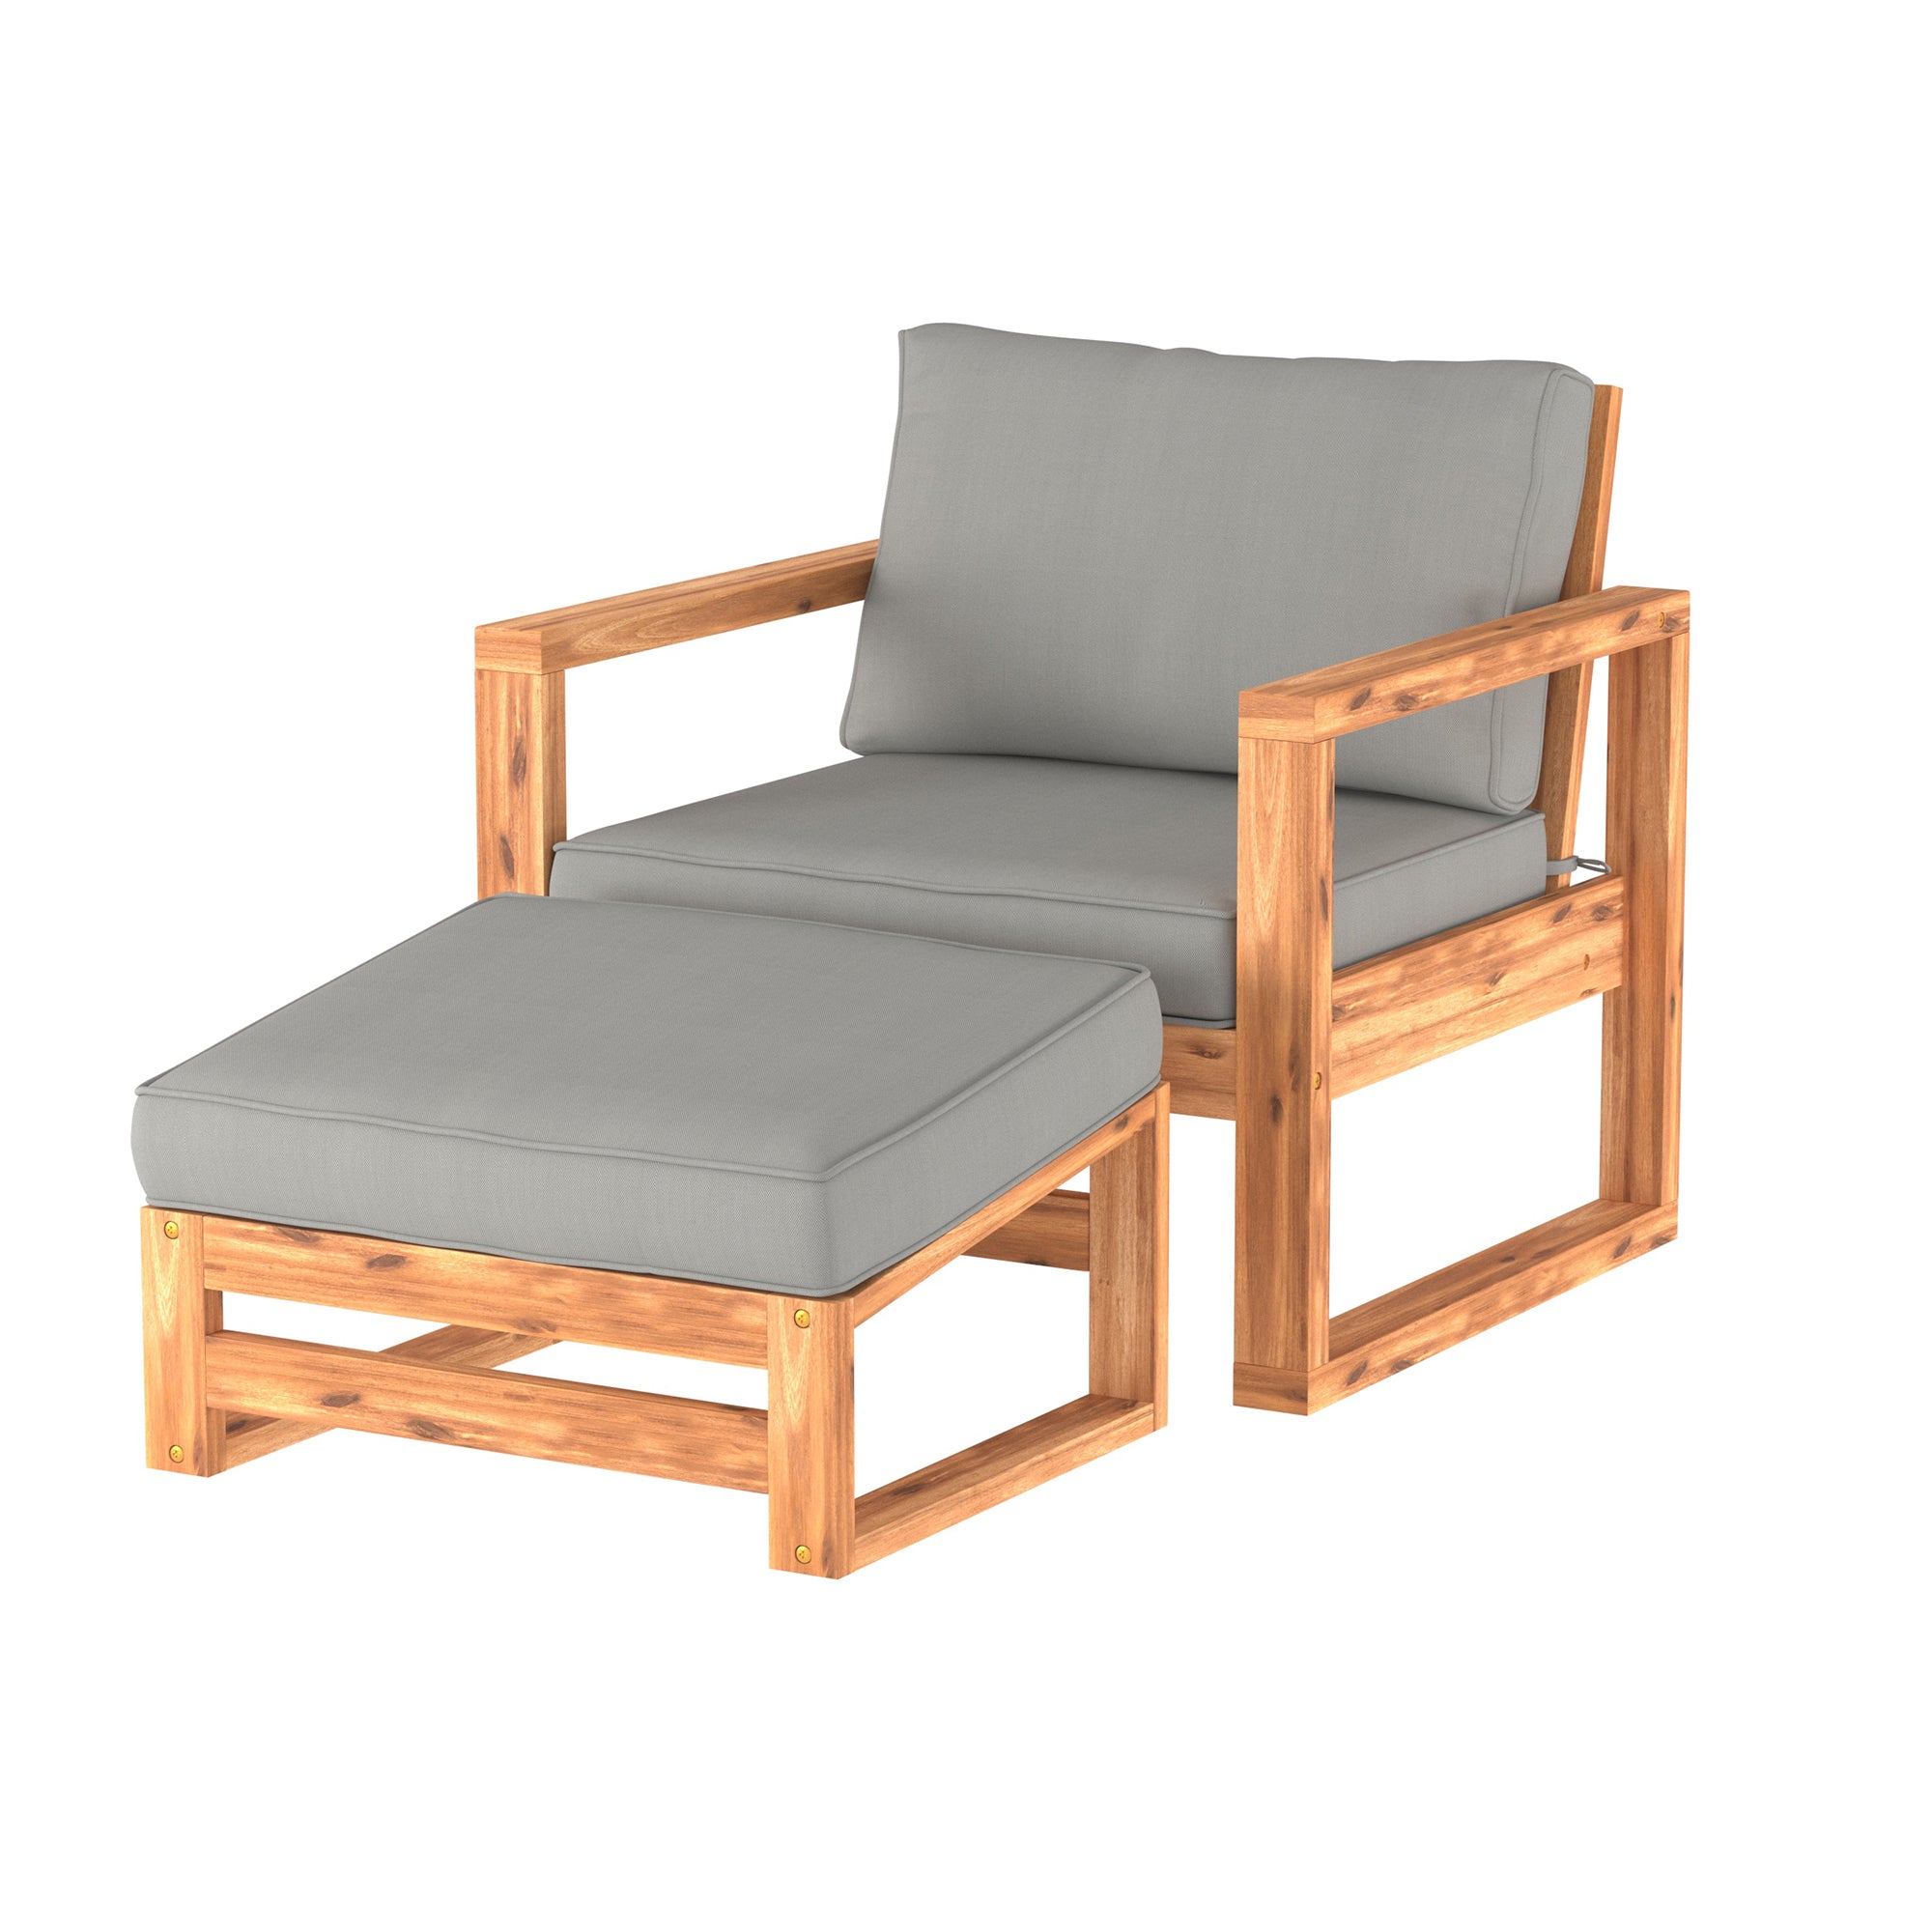 Modern Patio Chair and Ottoman - East Shore Modern Home Furnishings